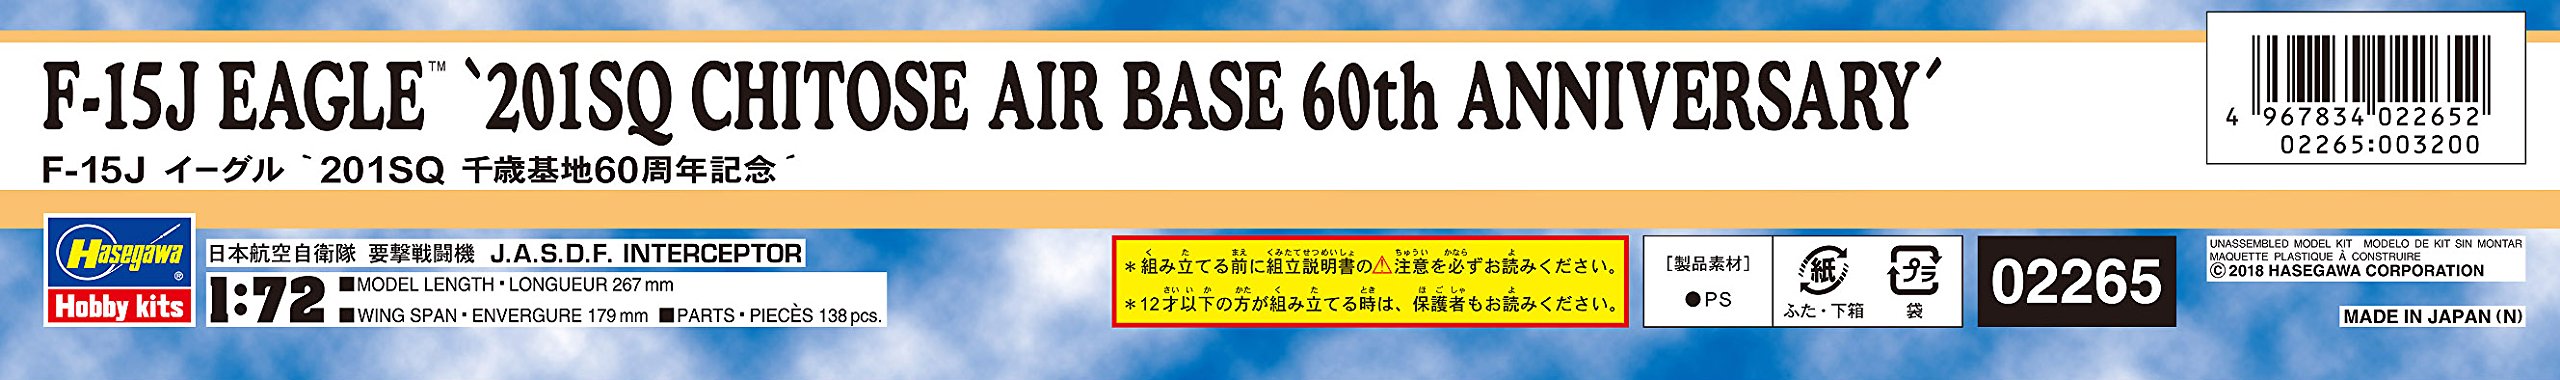 HASEGAWA 02265 F-15J Eagle '201Sq Chitose Air Base 60Th Anniversary' 1/72 Scale Kit